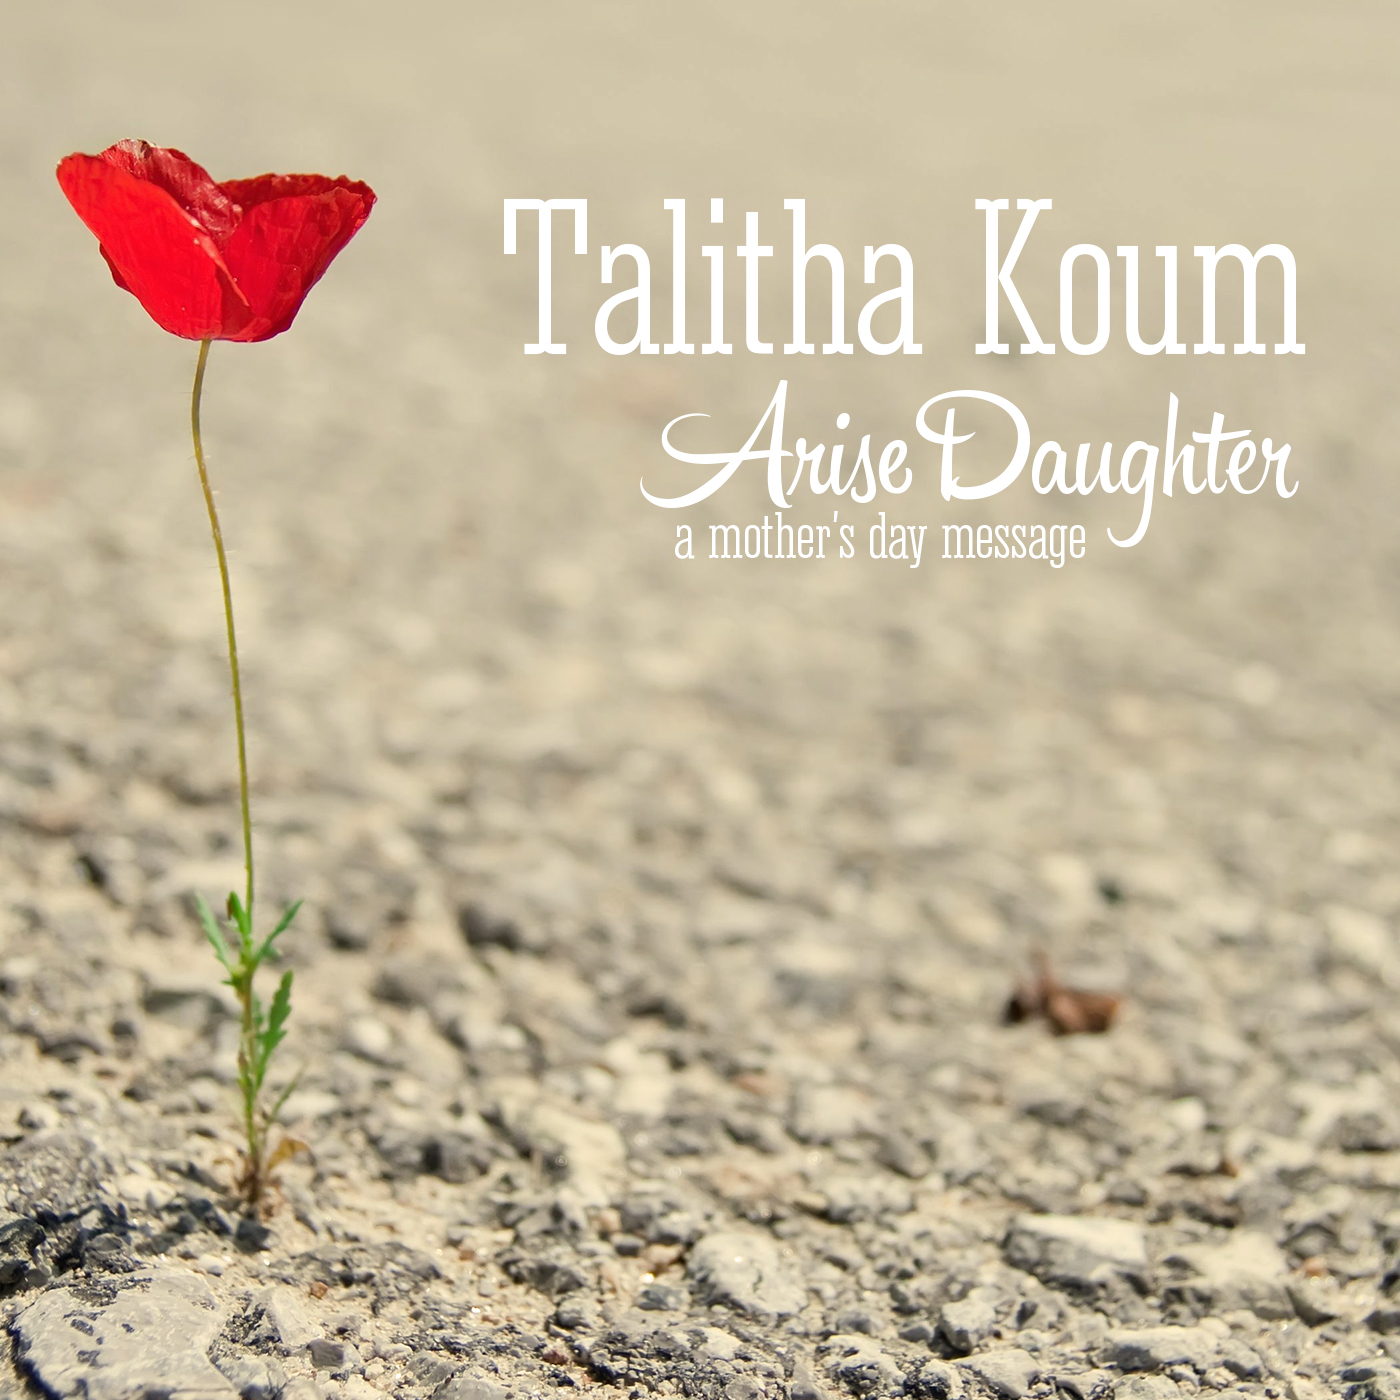 Talitha Koum: Arise Daughter Image